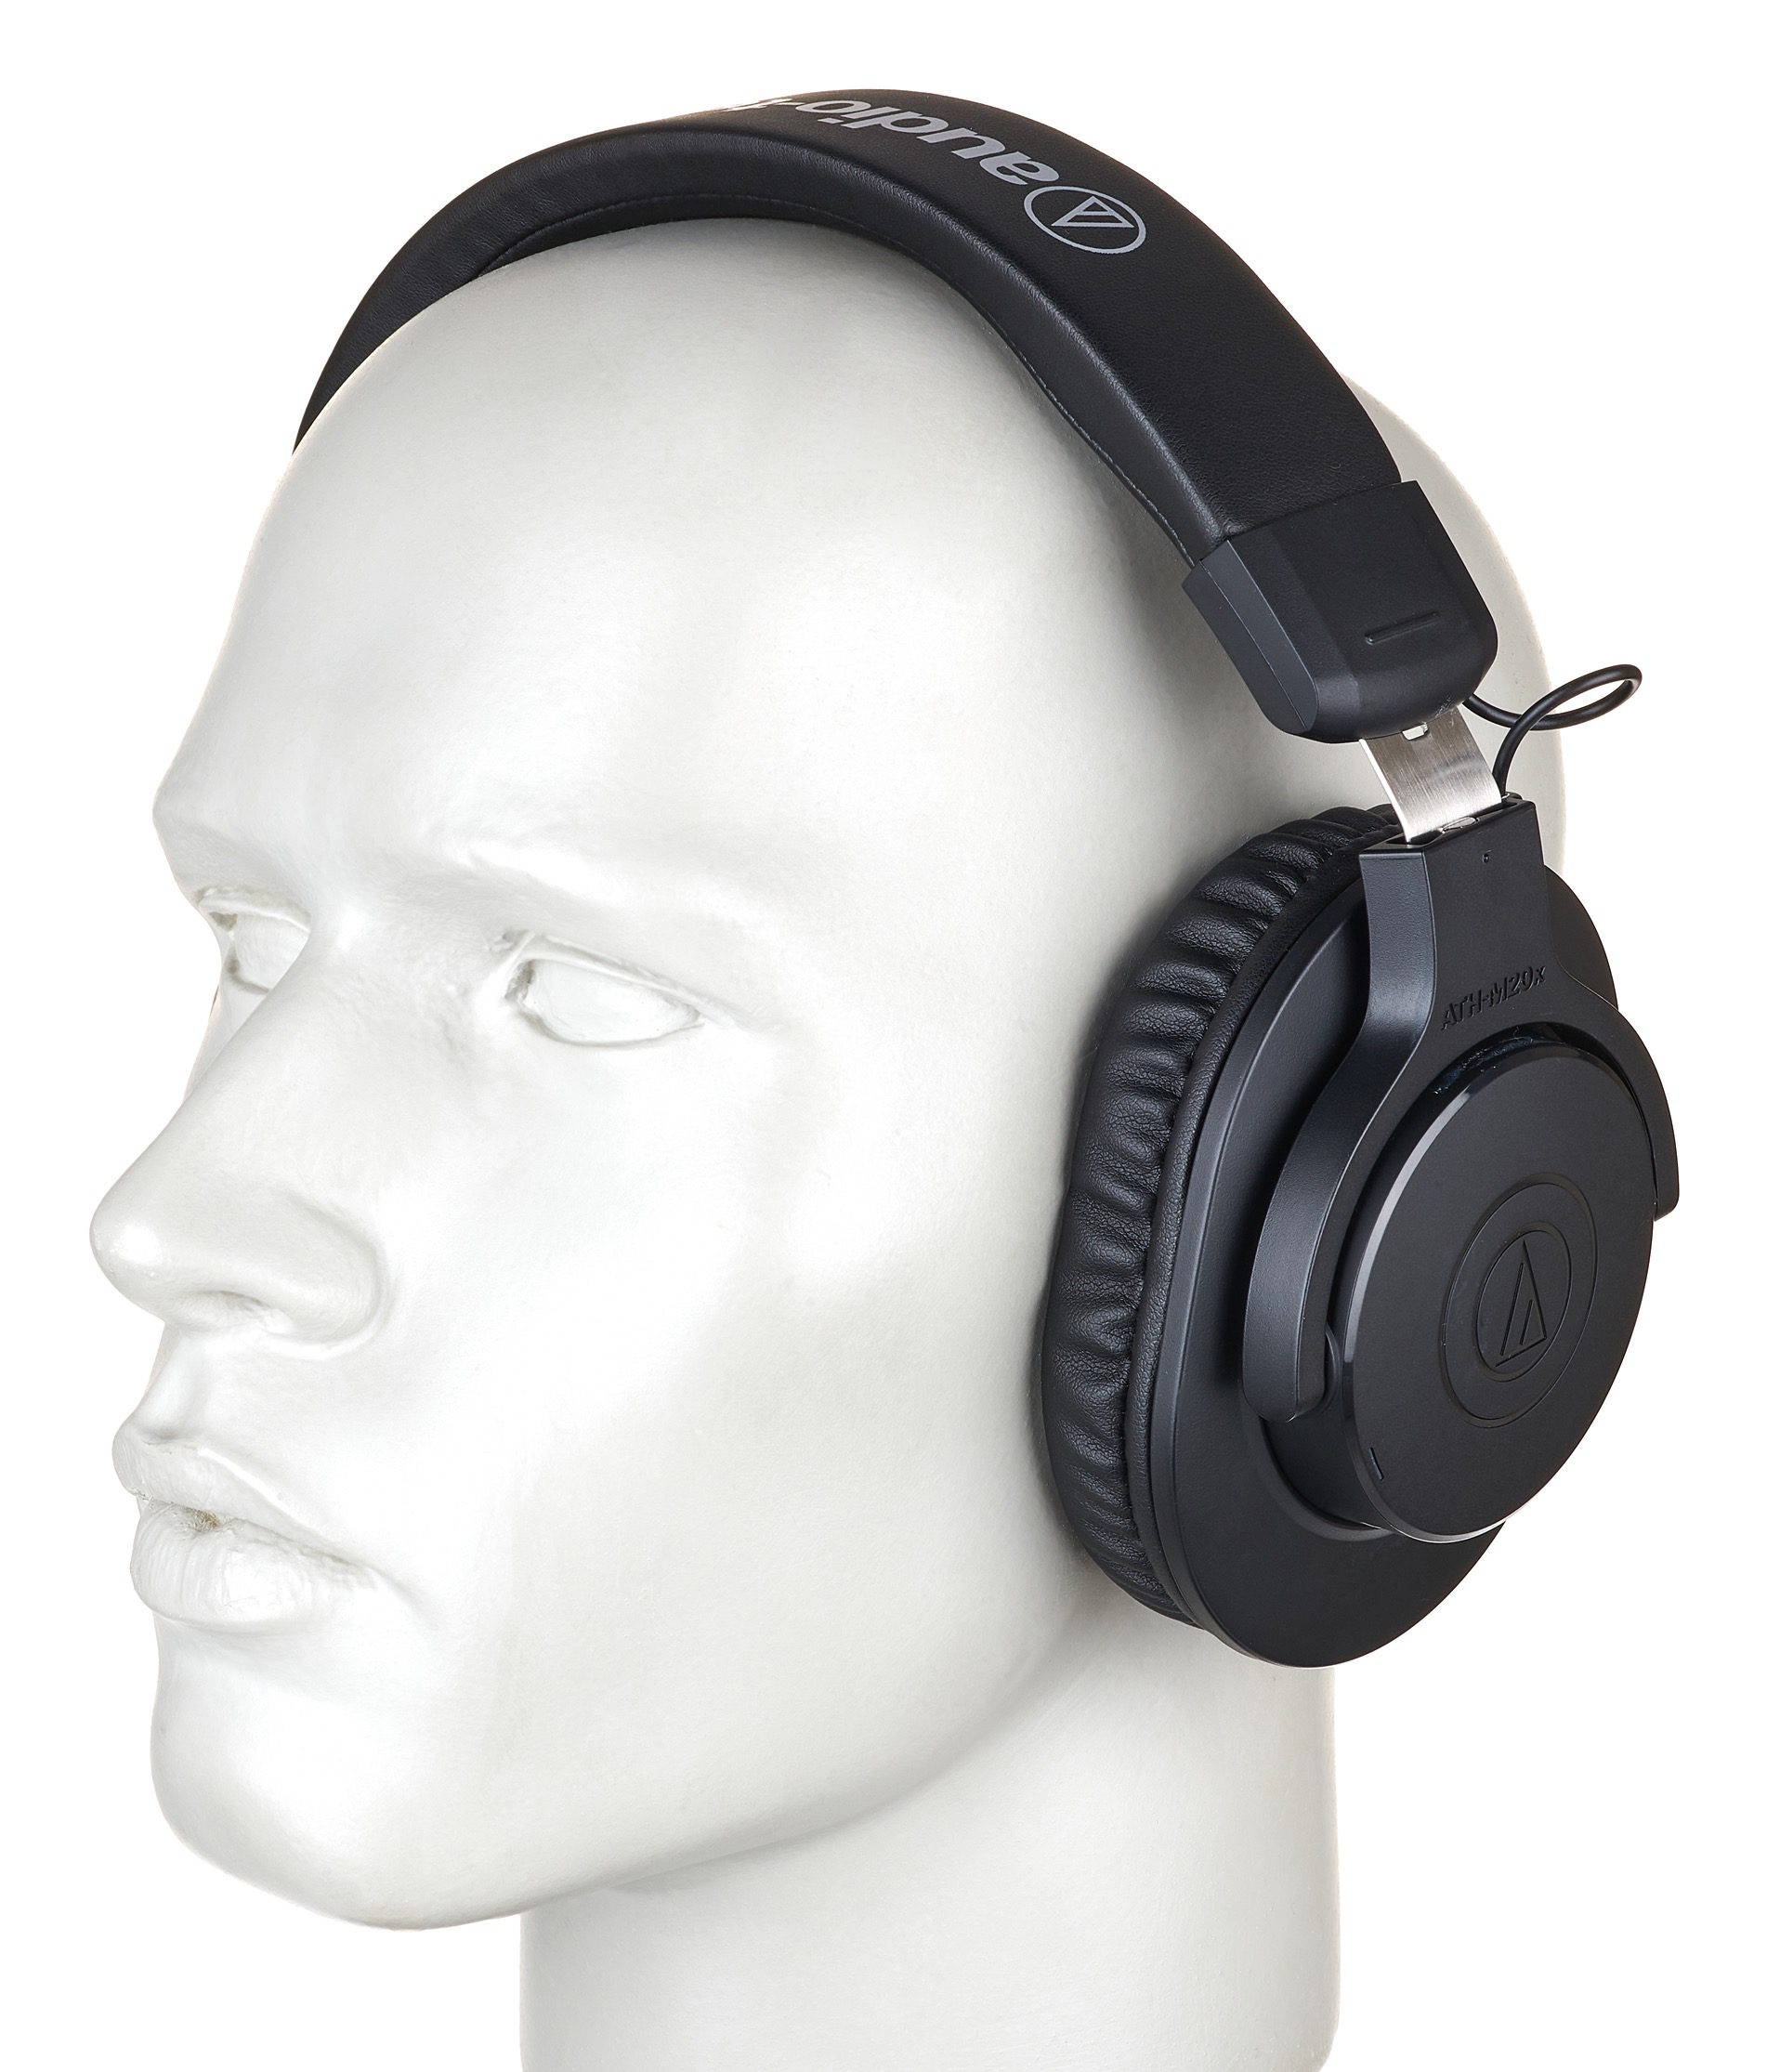 Audio-Technica ATH-M20xBT Review: Excellent Wireless Headphones